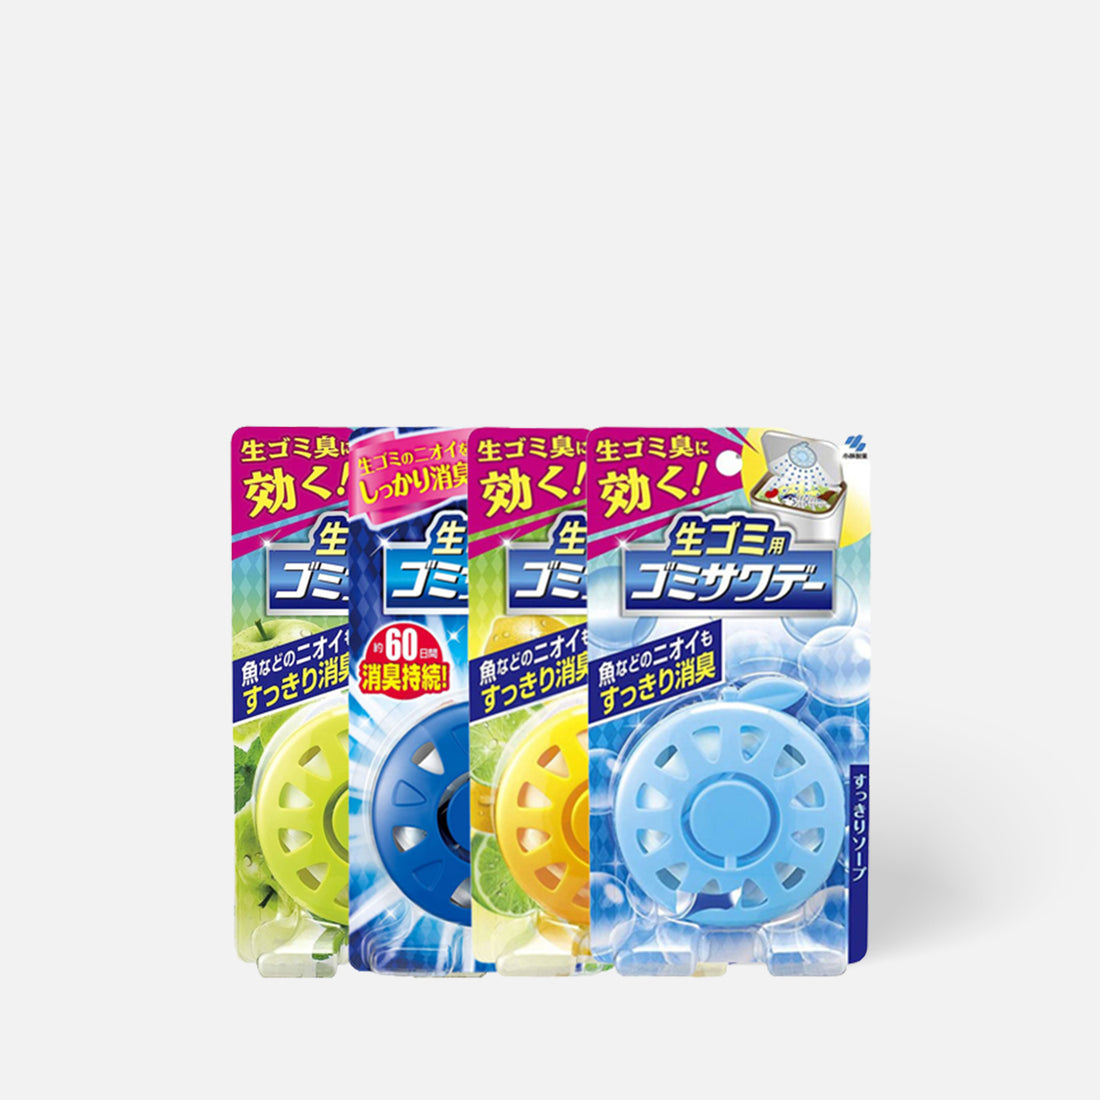 KOBAYASHI Sawaday Deodorant Air Freshener For Garbage Bin Clean Soap